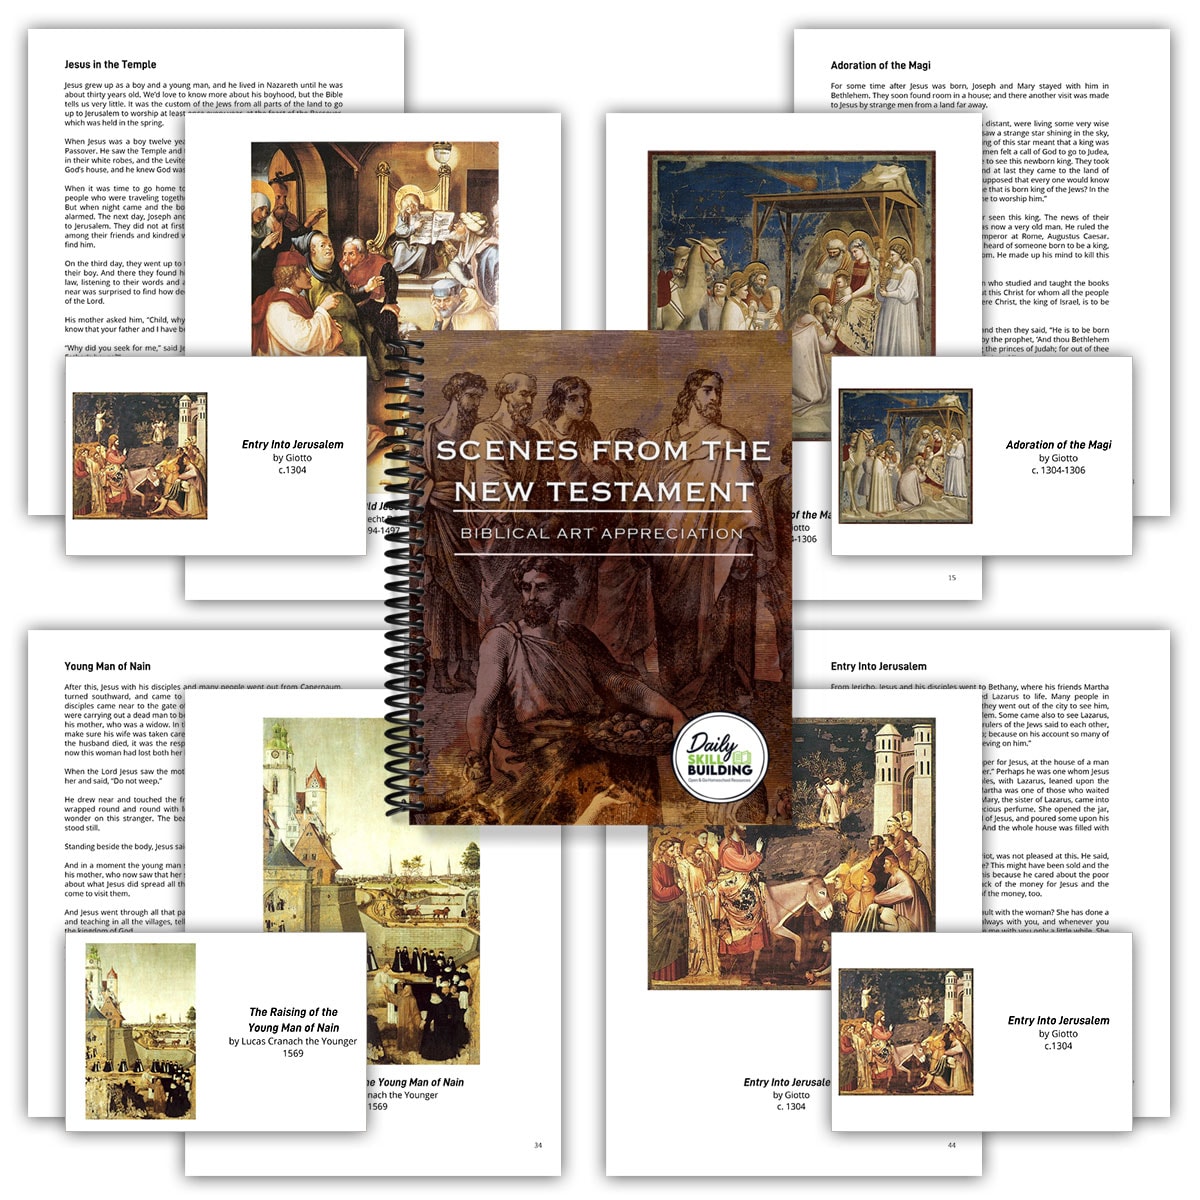 Scenes from the Old & New Testament - Biblical Art Appreciation Set